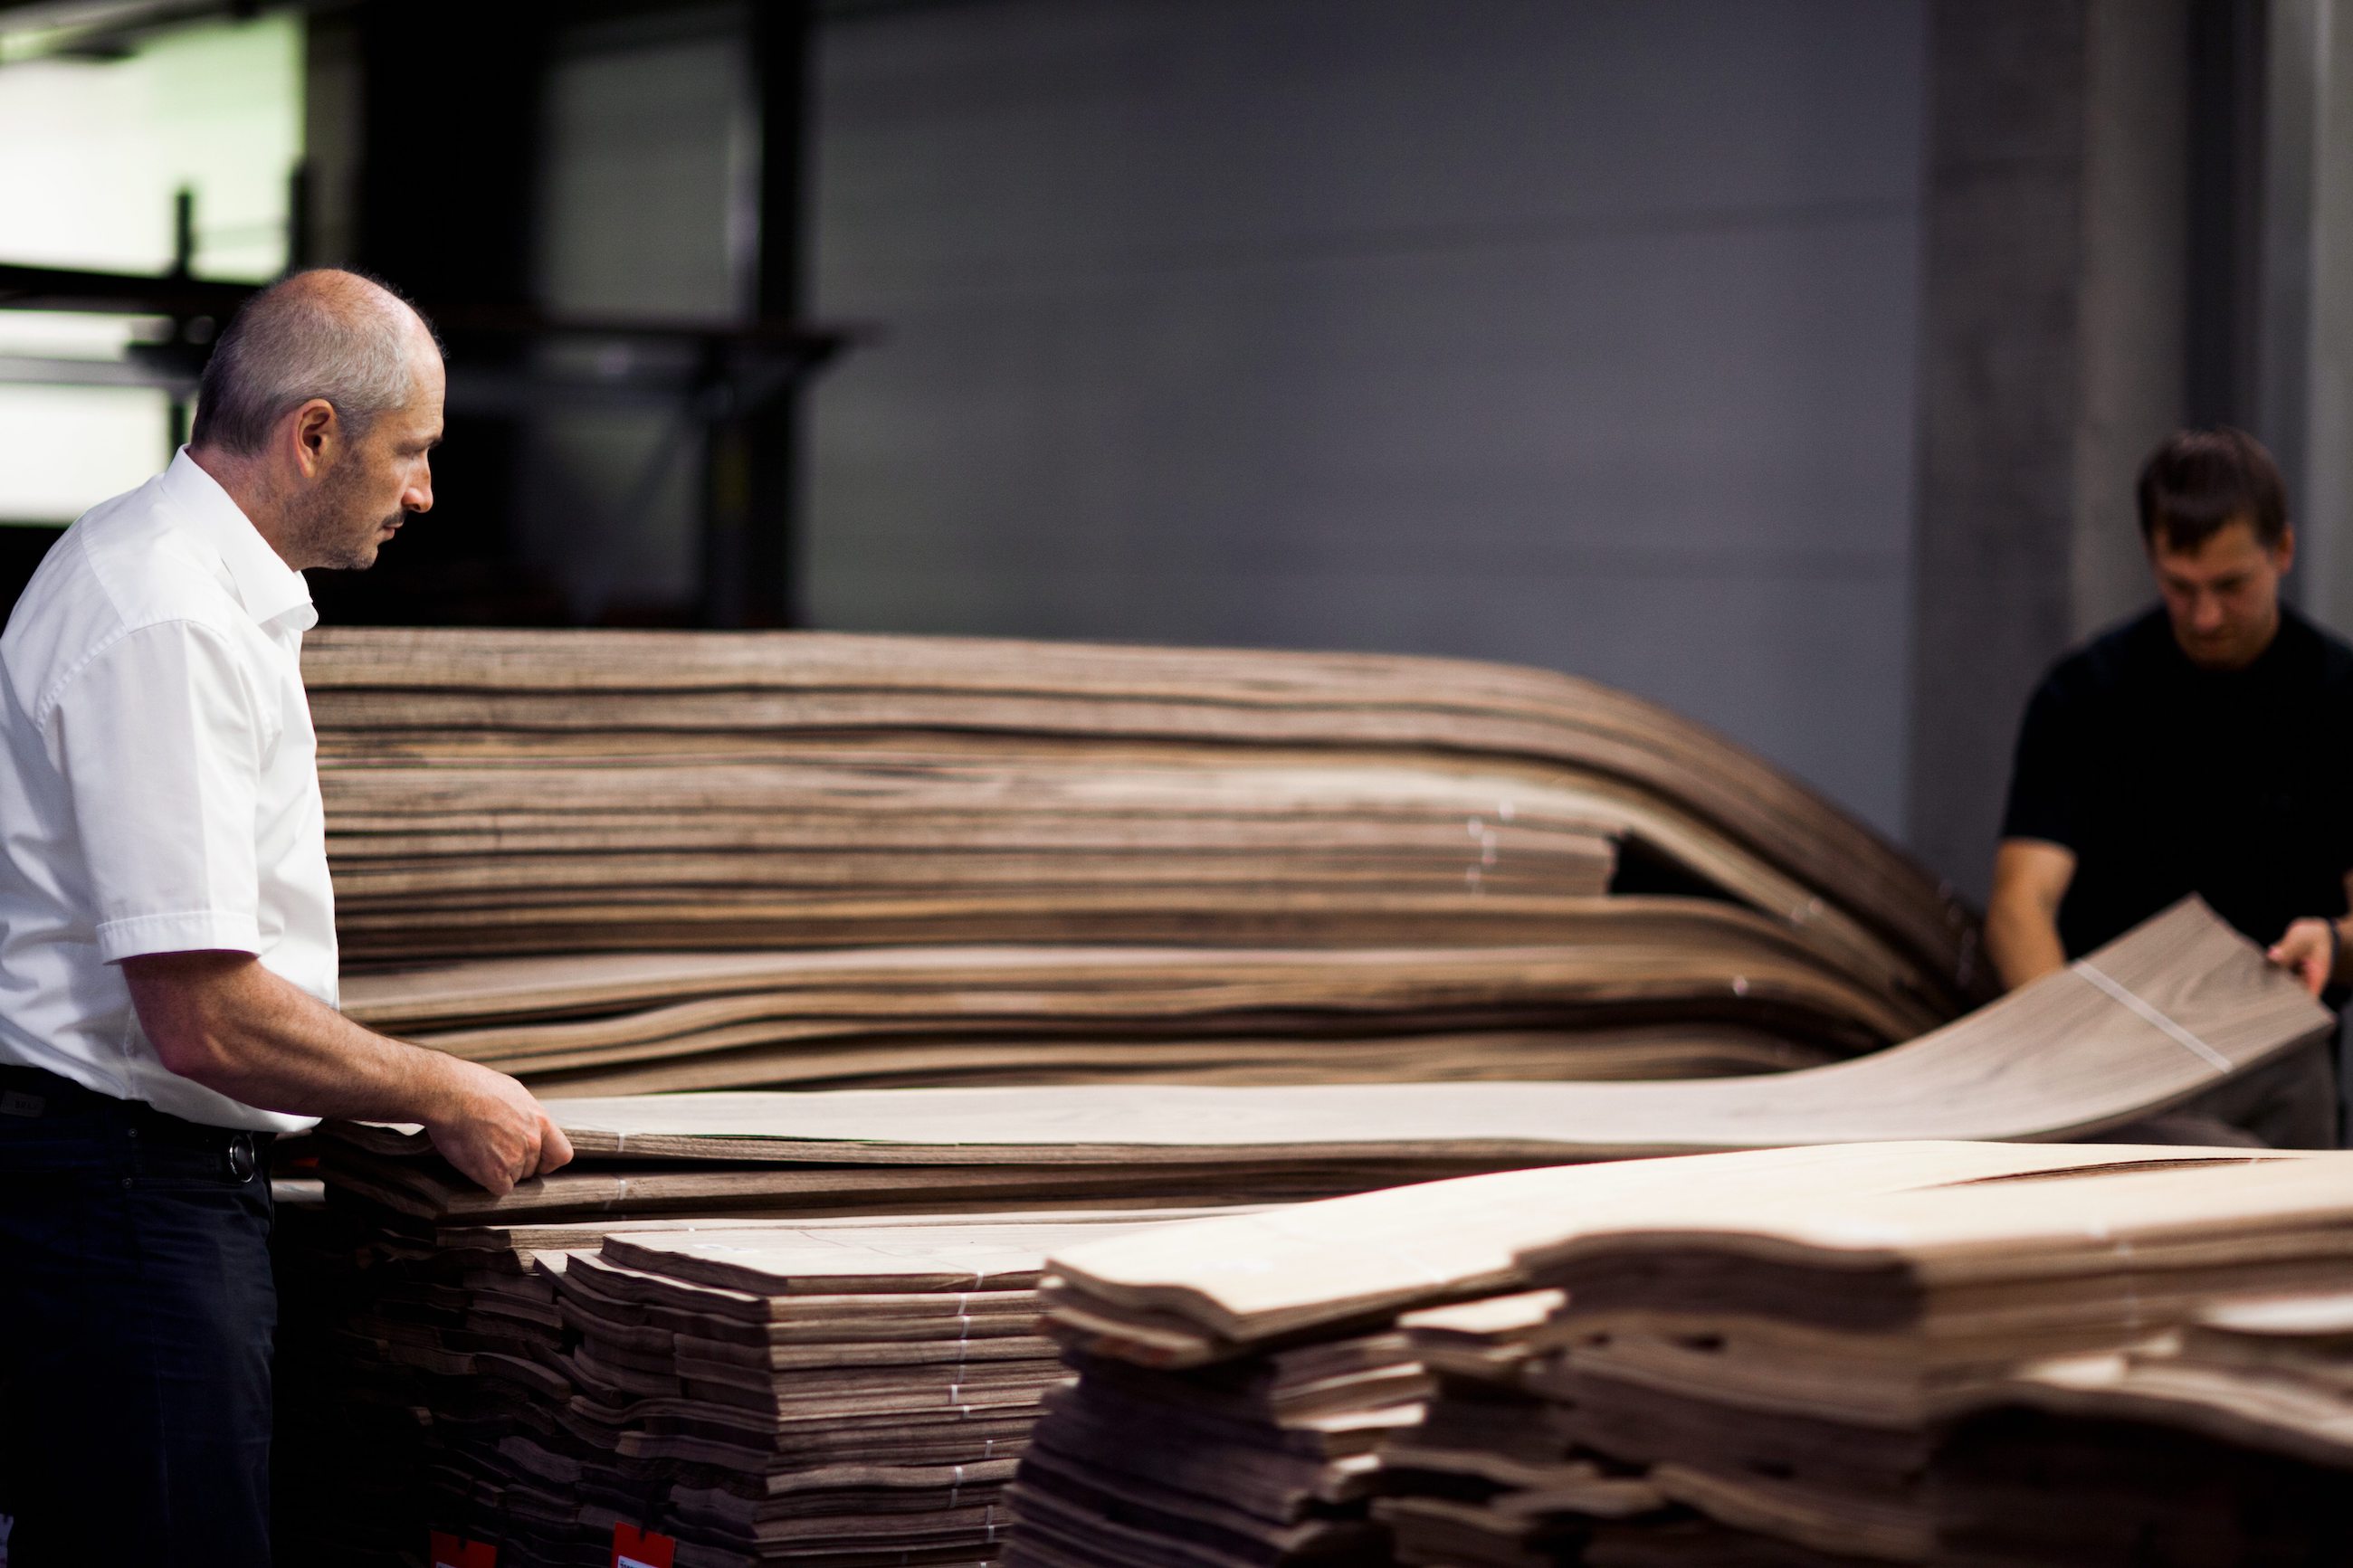 bulthaup&#039;s master veneer craftsman Johann Paintmeier selects the wood sheets